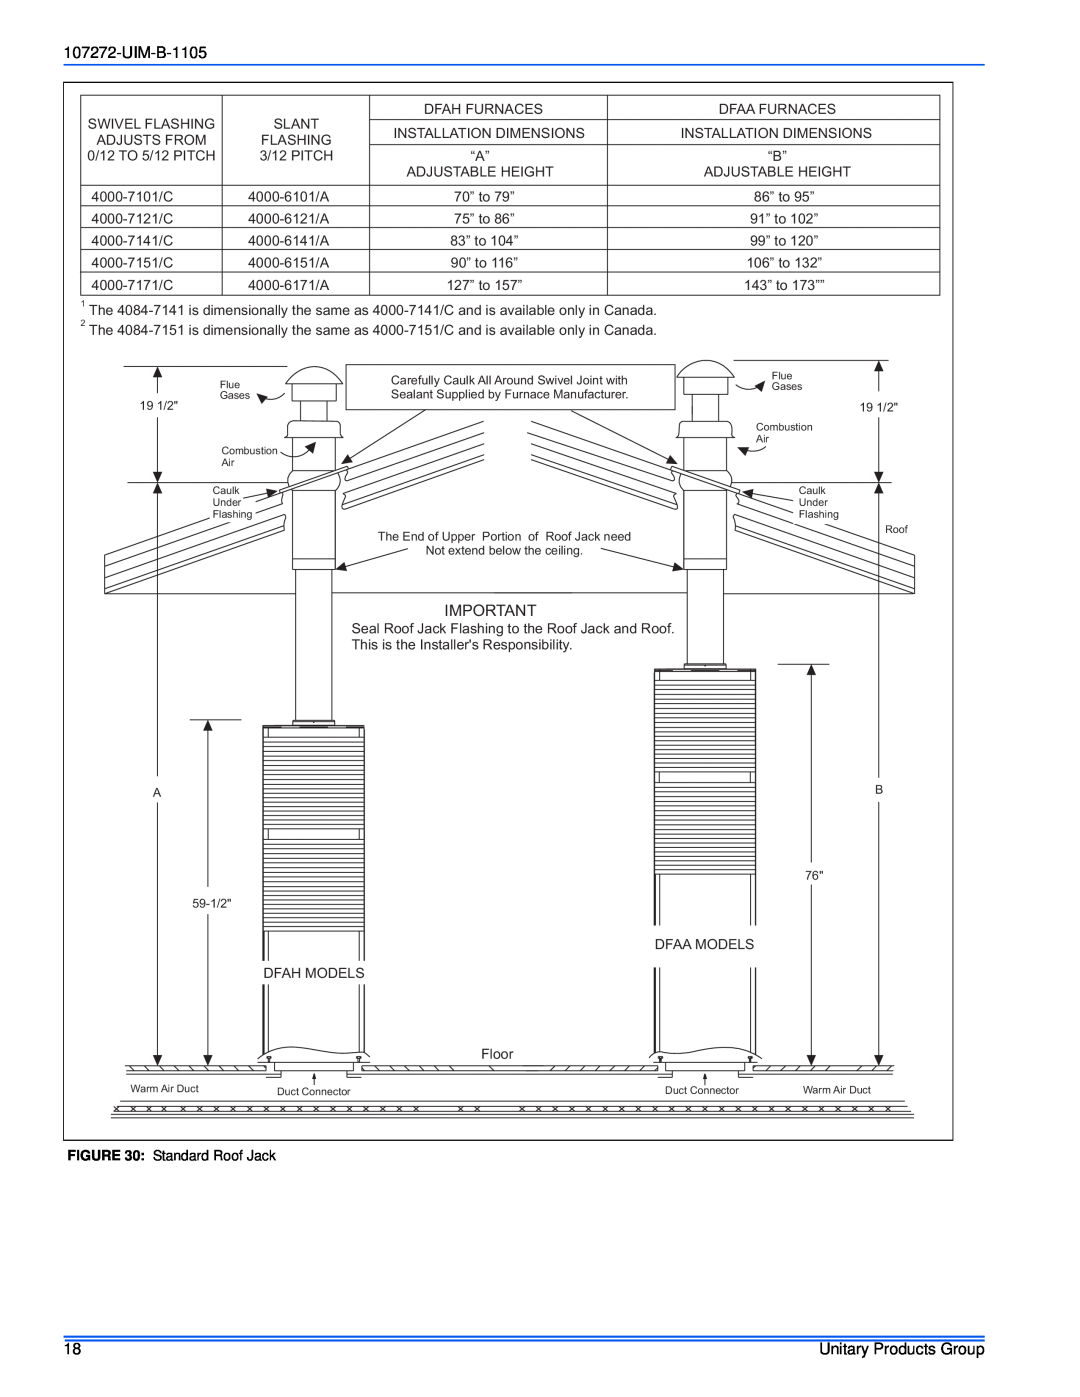 York DFAH, DFAA installation manual UIM-B-1105, Standard Roof Jack, Unitary Products Group 